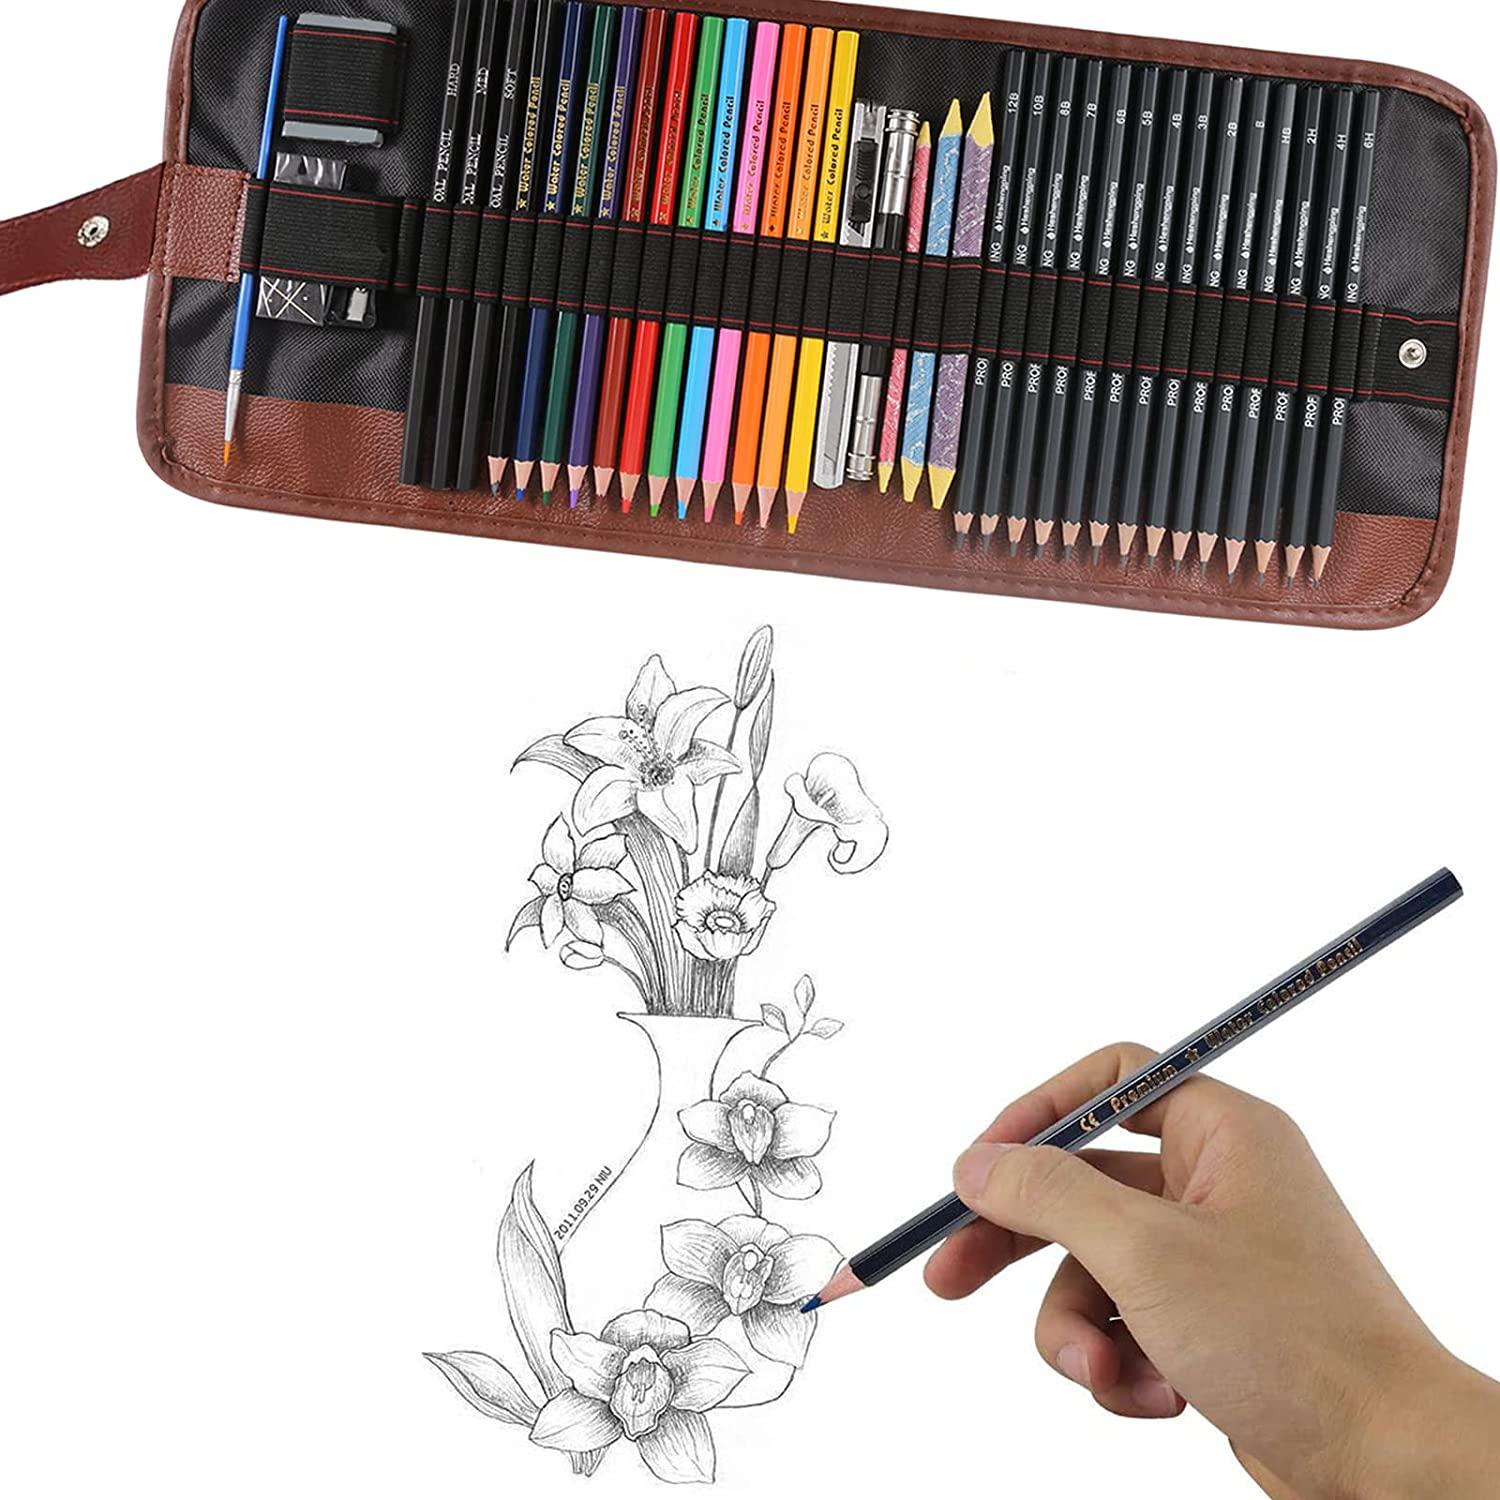 Heshengping, Sketching Pencil Set Drawing Pen Charcoal Sketch Kit Cover  Graphite Pencils Charcoal Pencils Watercolor Pencils Paper Erasable Pen  Beginners Artist Children and Adults(39pcs Art Supplies) 39 Piece Set